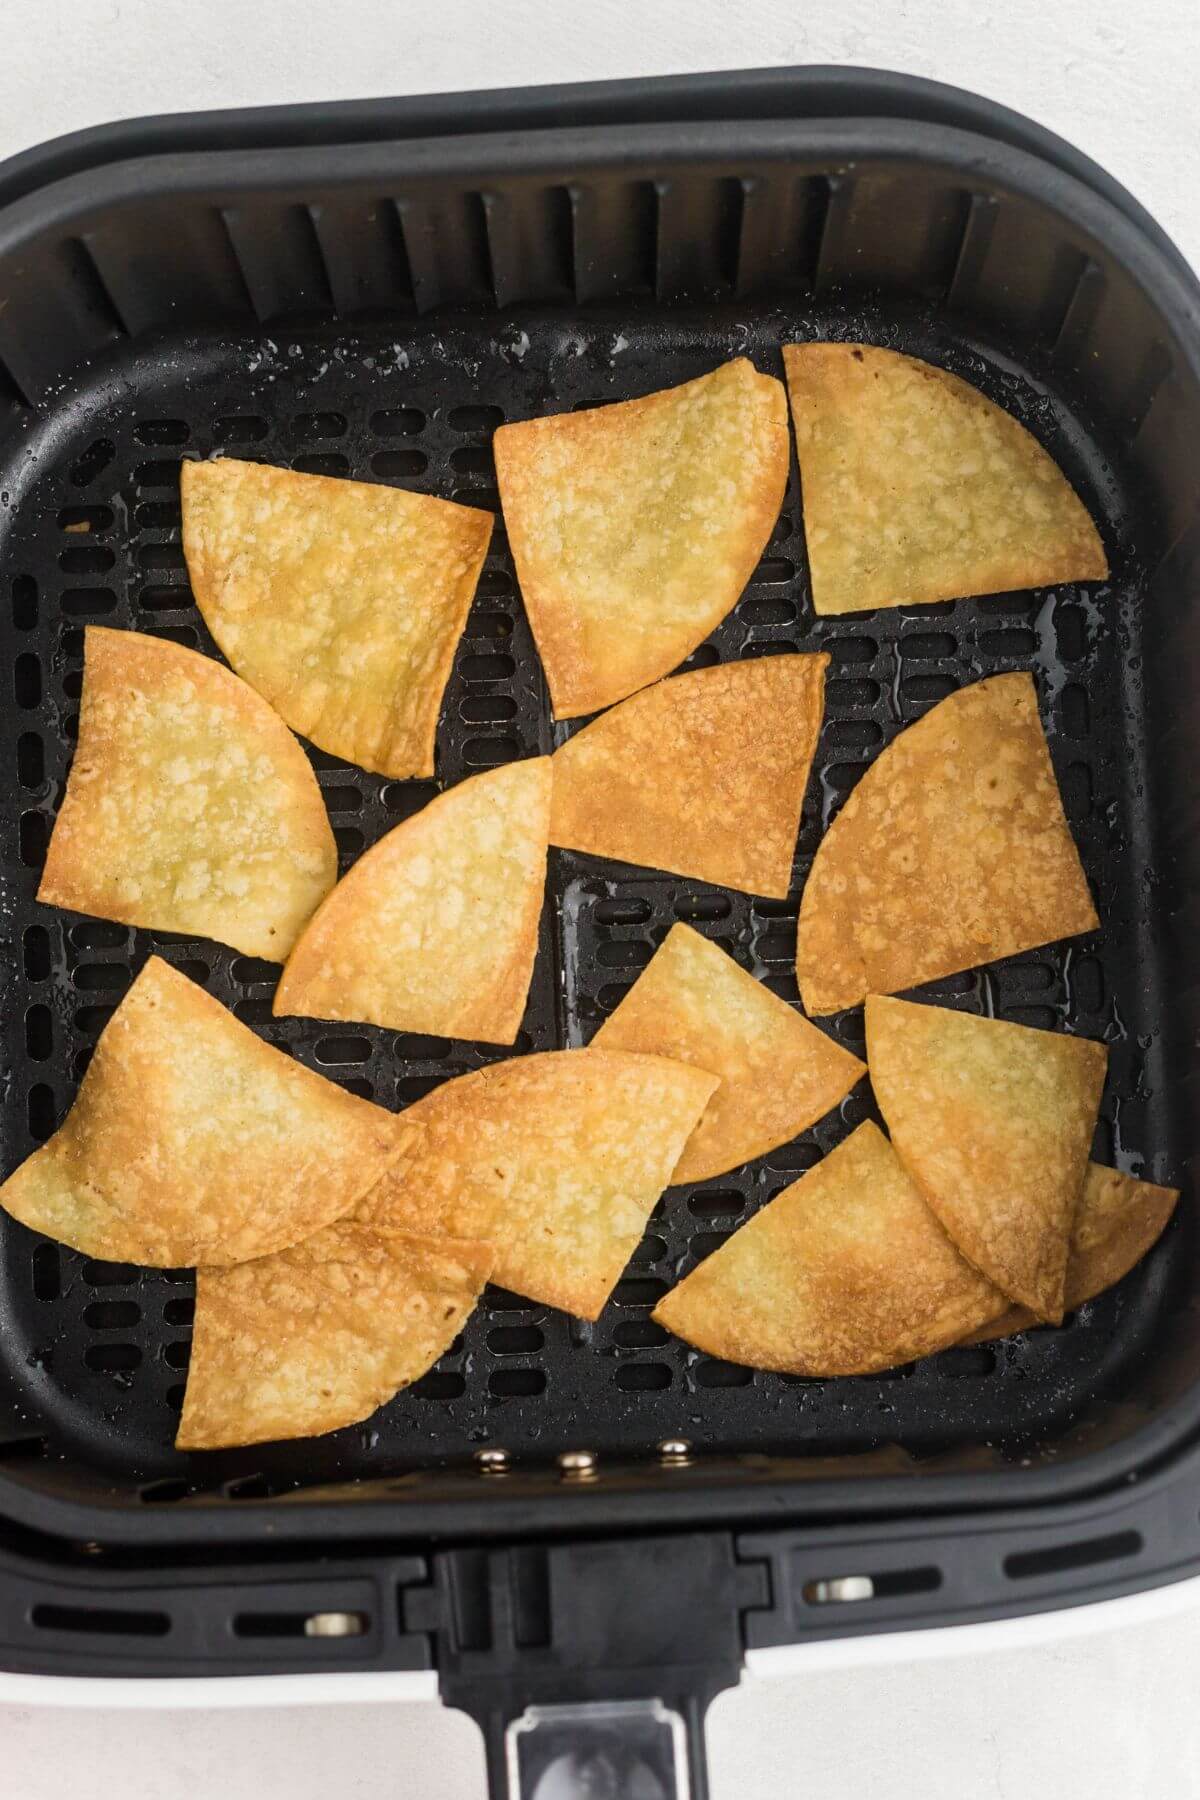 Golden crispy tortilla chips in the air fryer basket, after being air fried. 